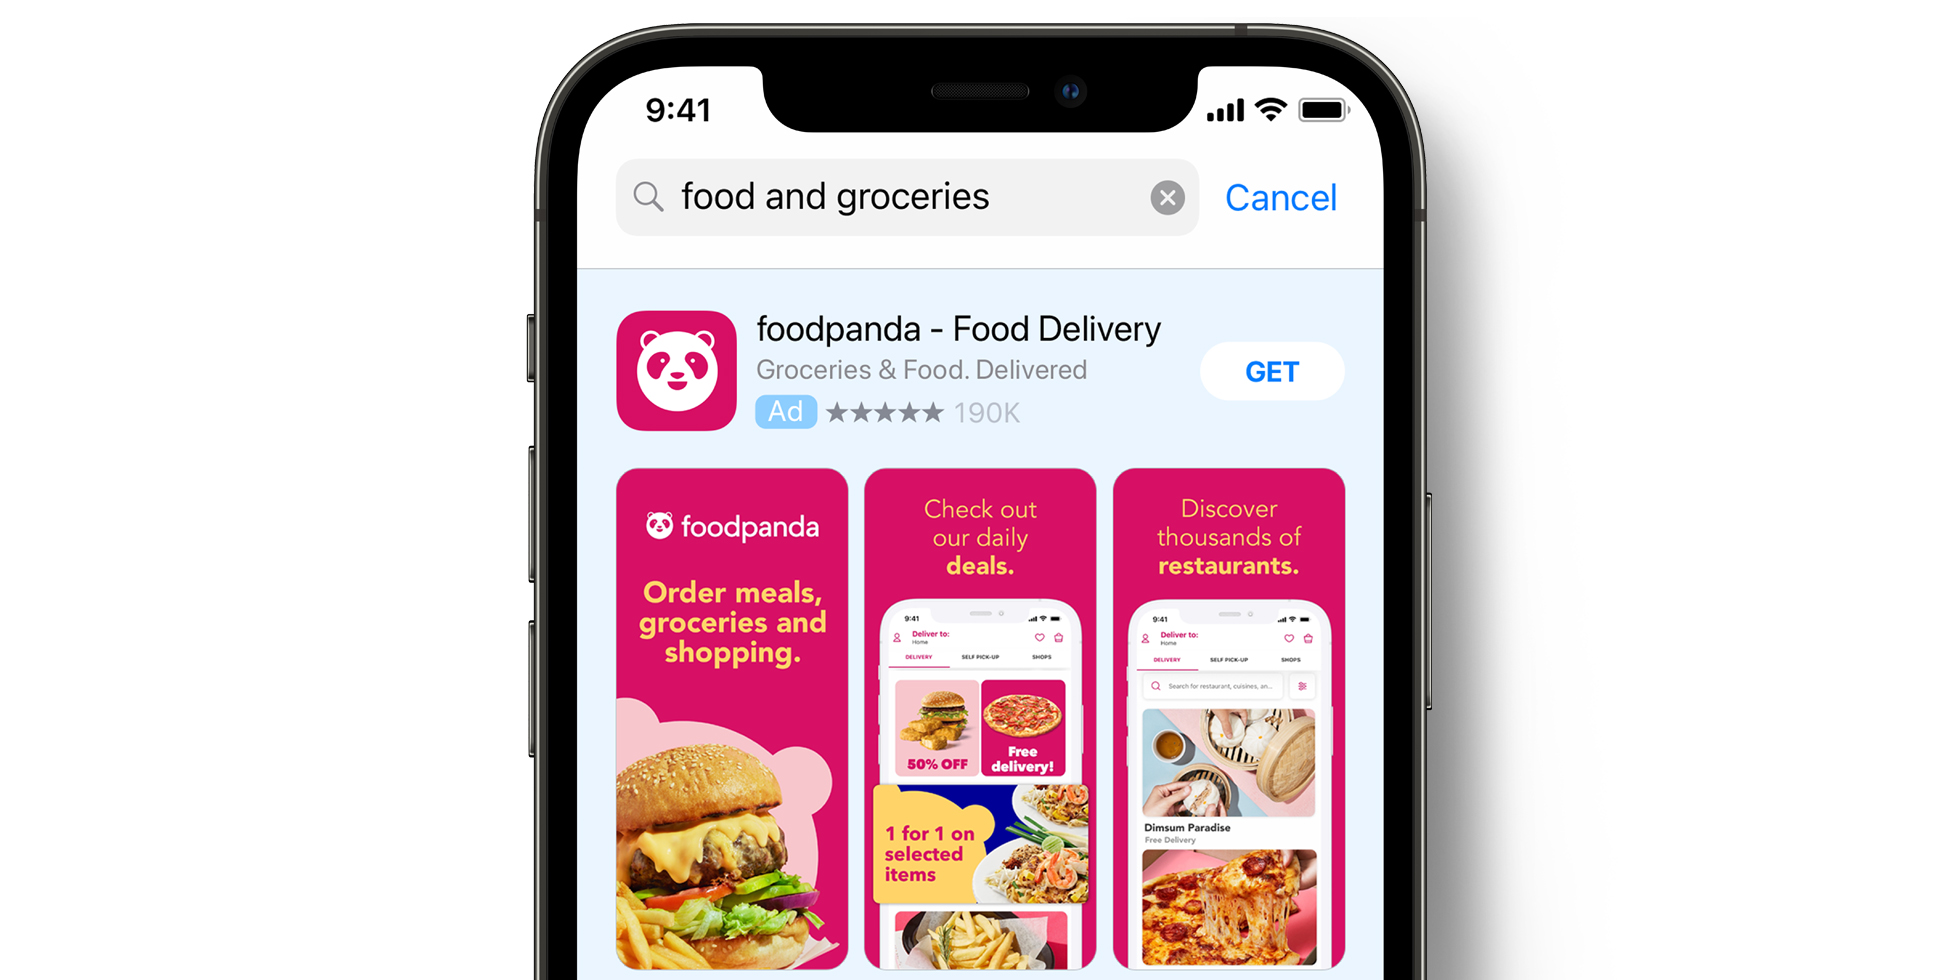 foodpanda-Anzeige im App Store